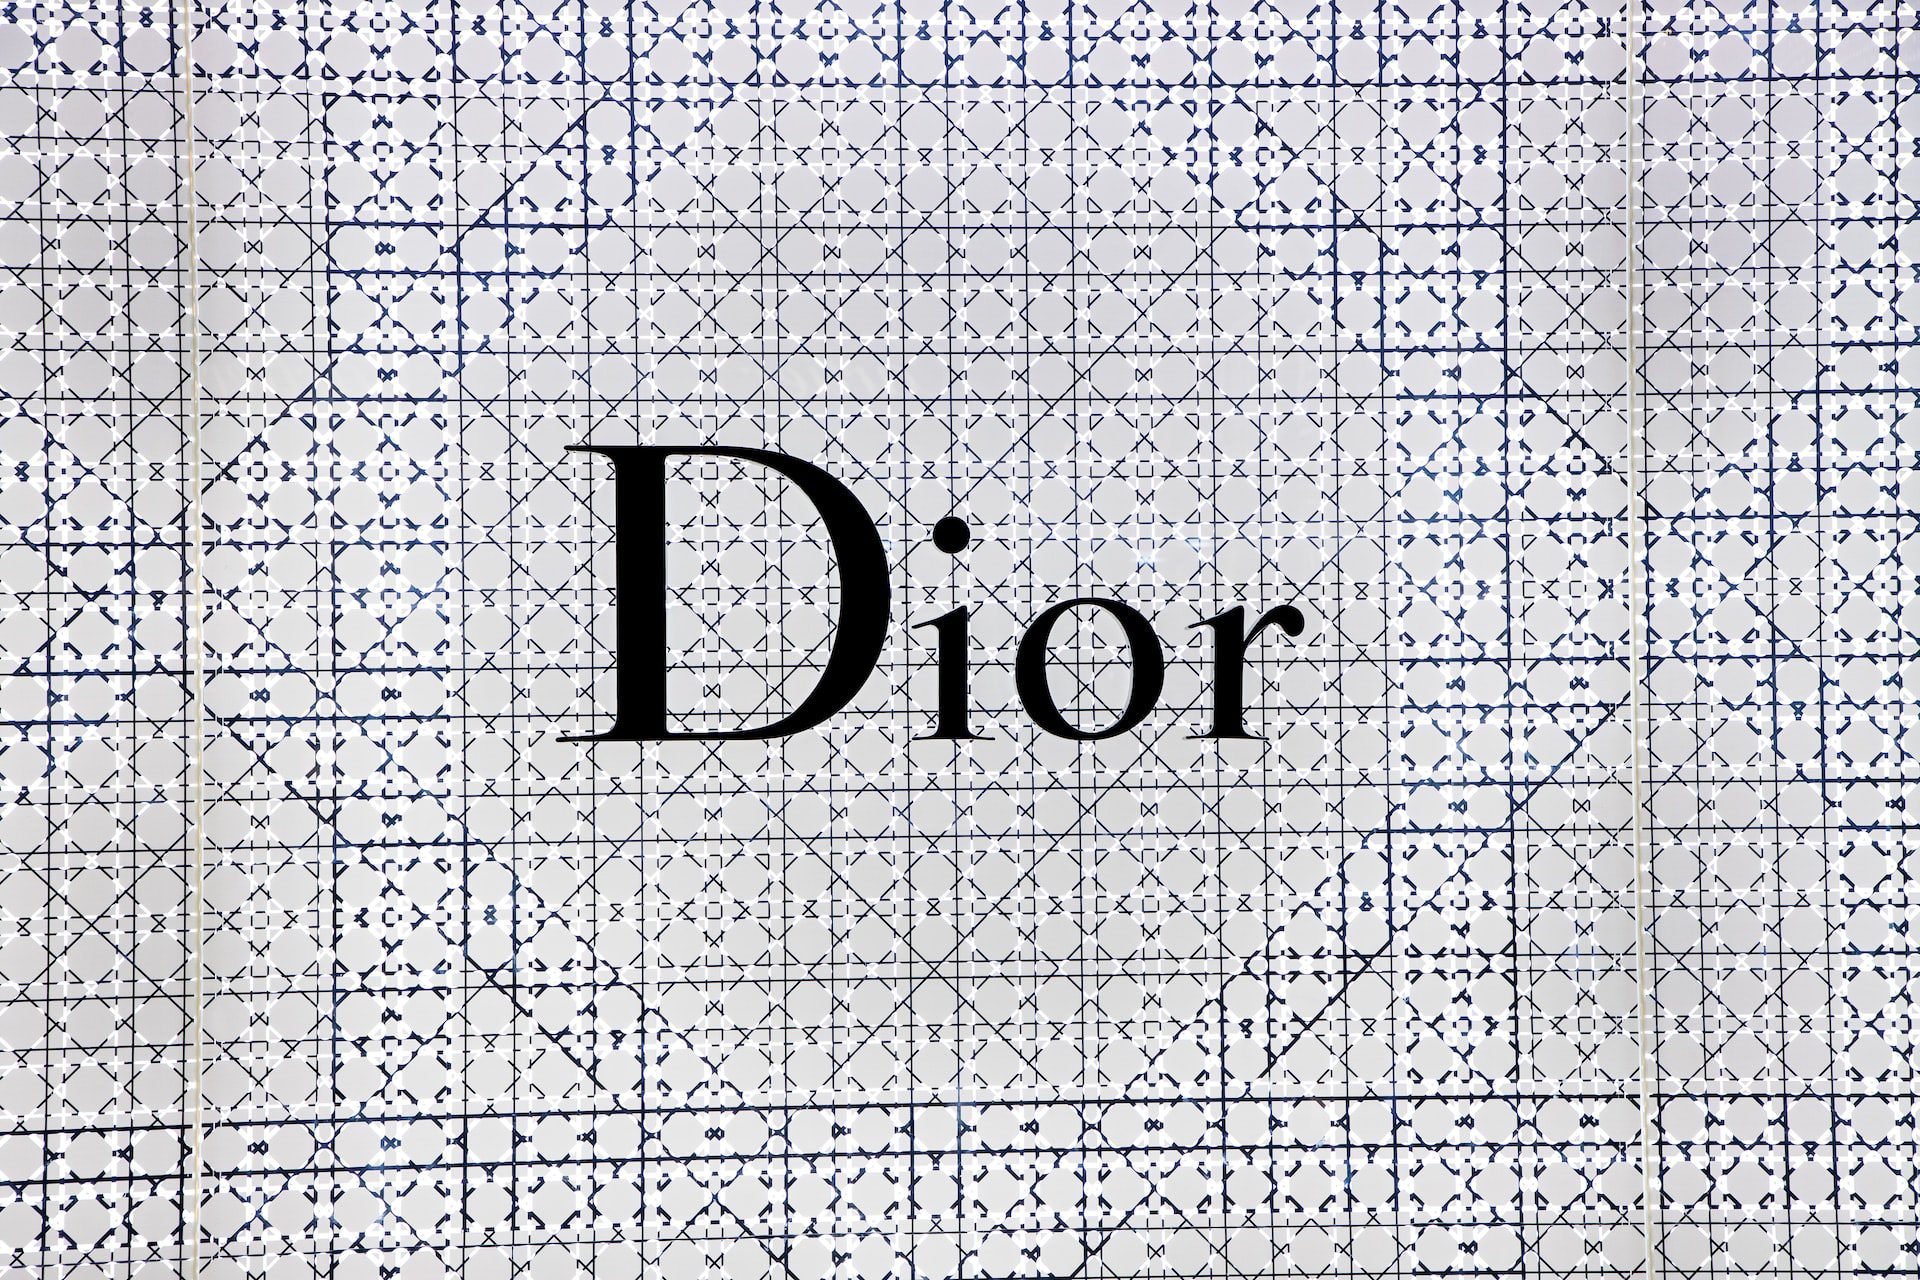 Christian Dior - Designer & Founder of Top Fashion House Christian